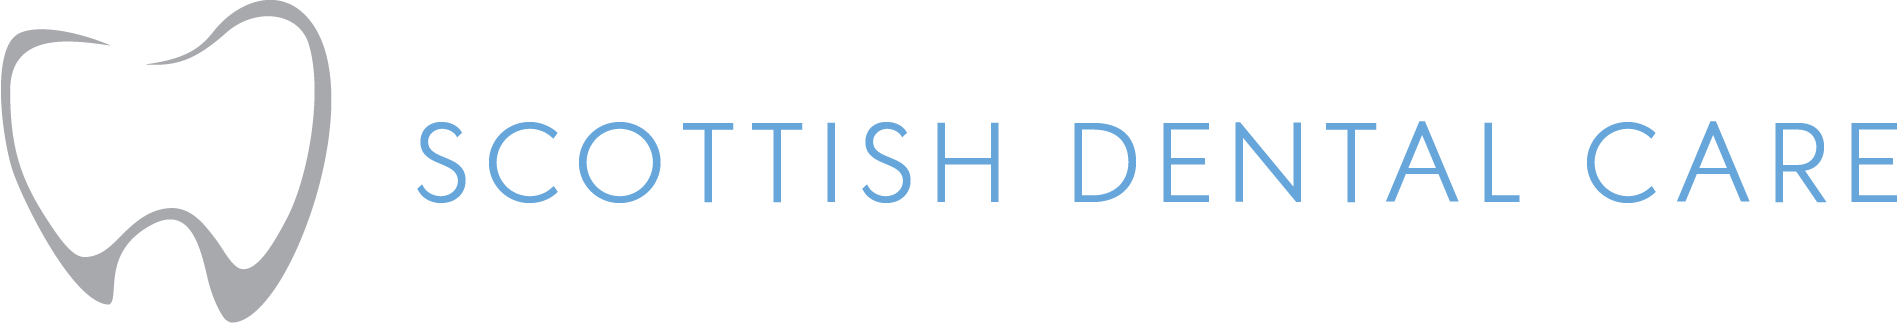 Scottish Dental Care logo